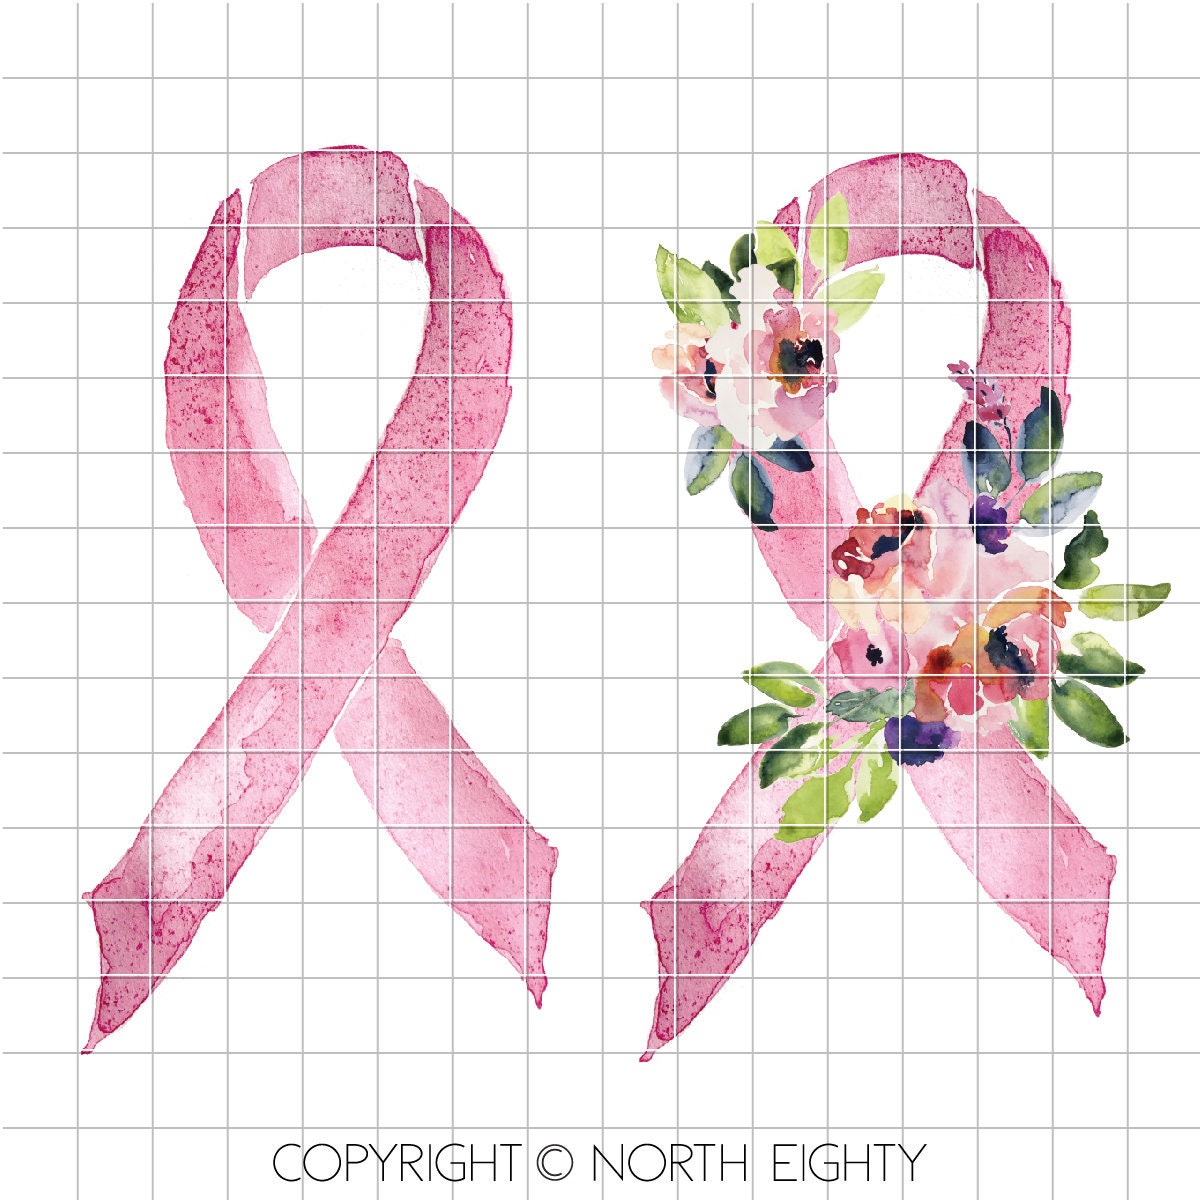 Pink Ribbon png - Breast Cancer Awareness png - Ribbon Sublimation Digital Design - Clip Art - Waterslide - Awareness png - Breast Cancer